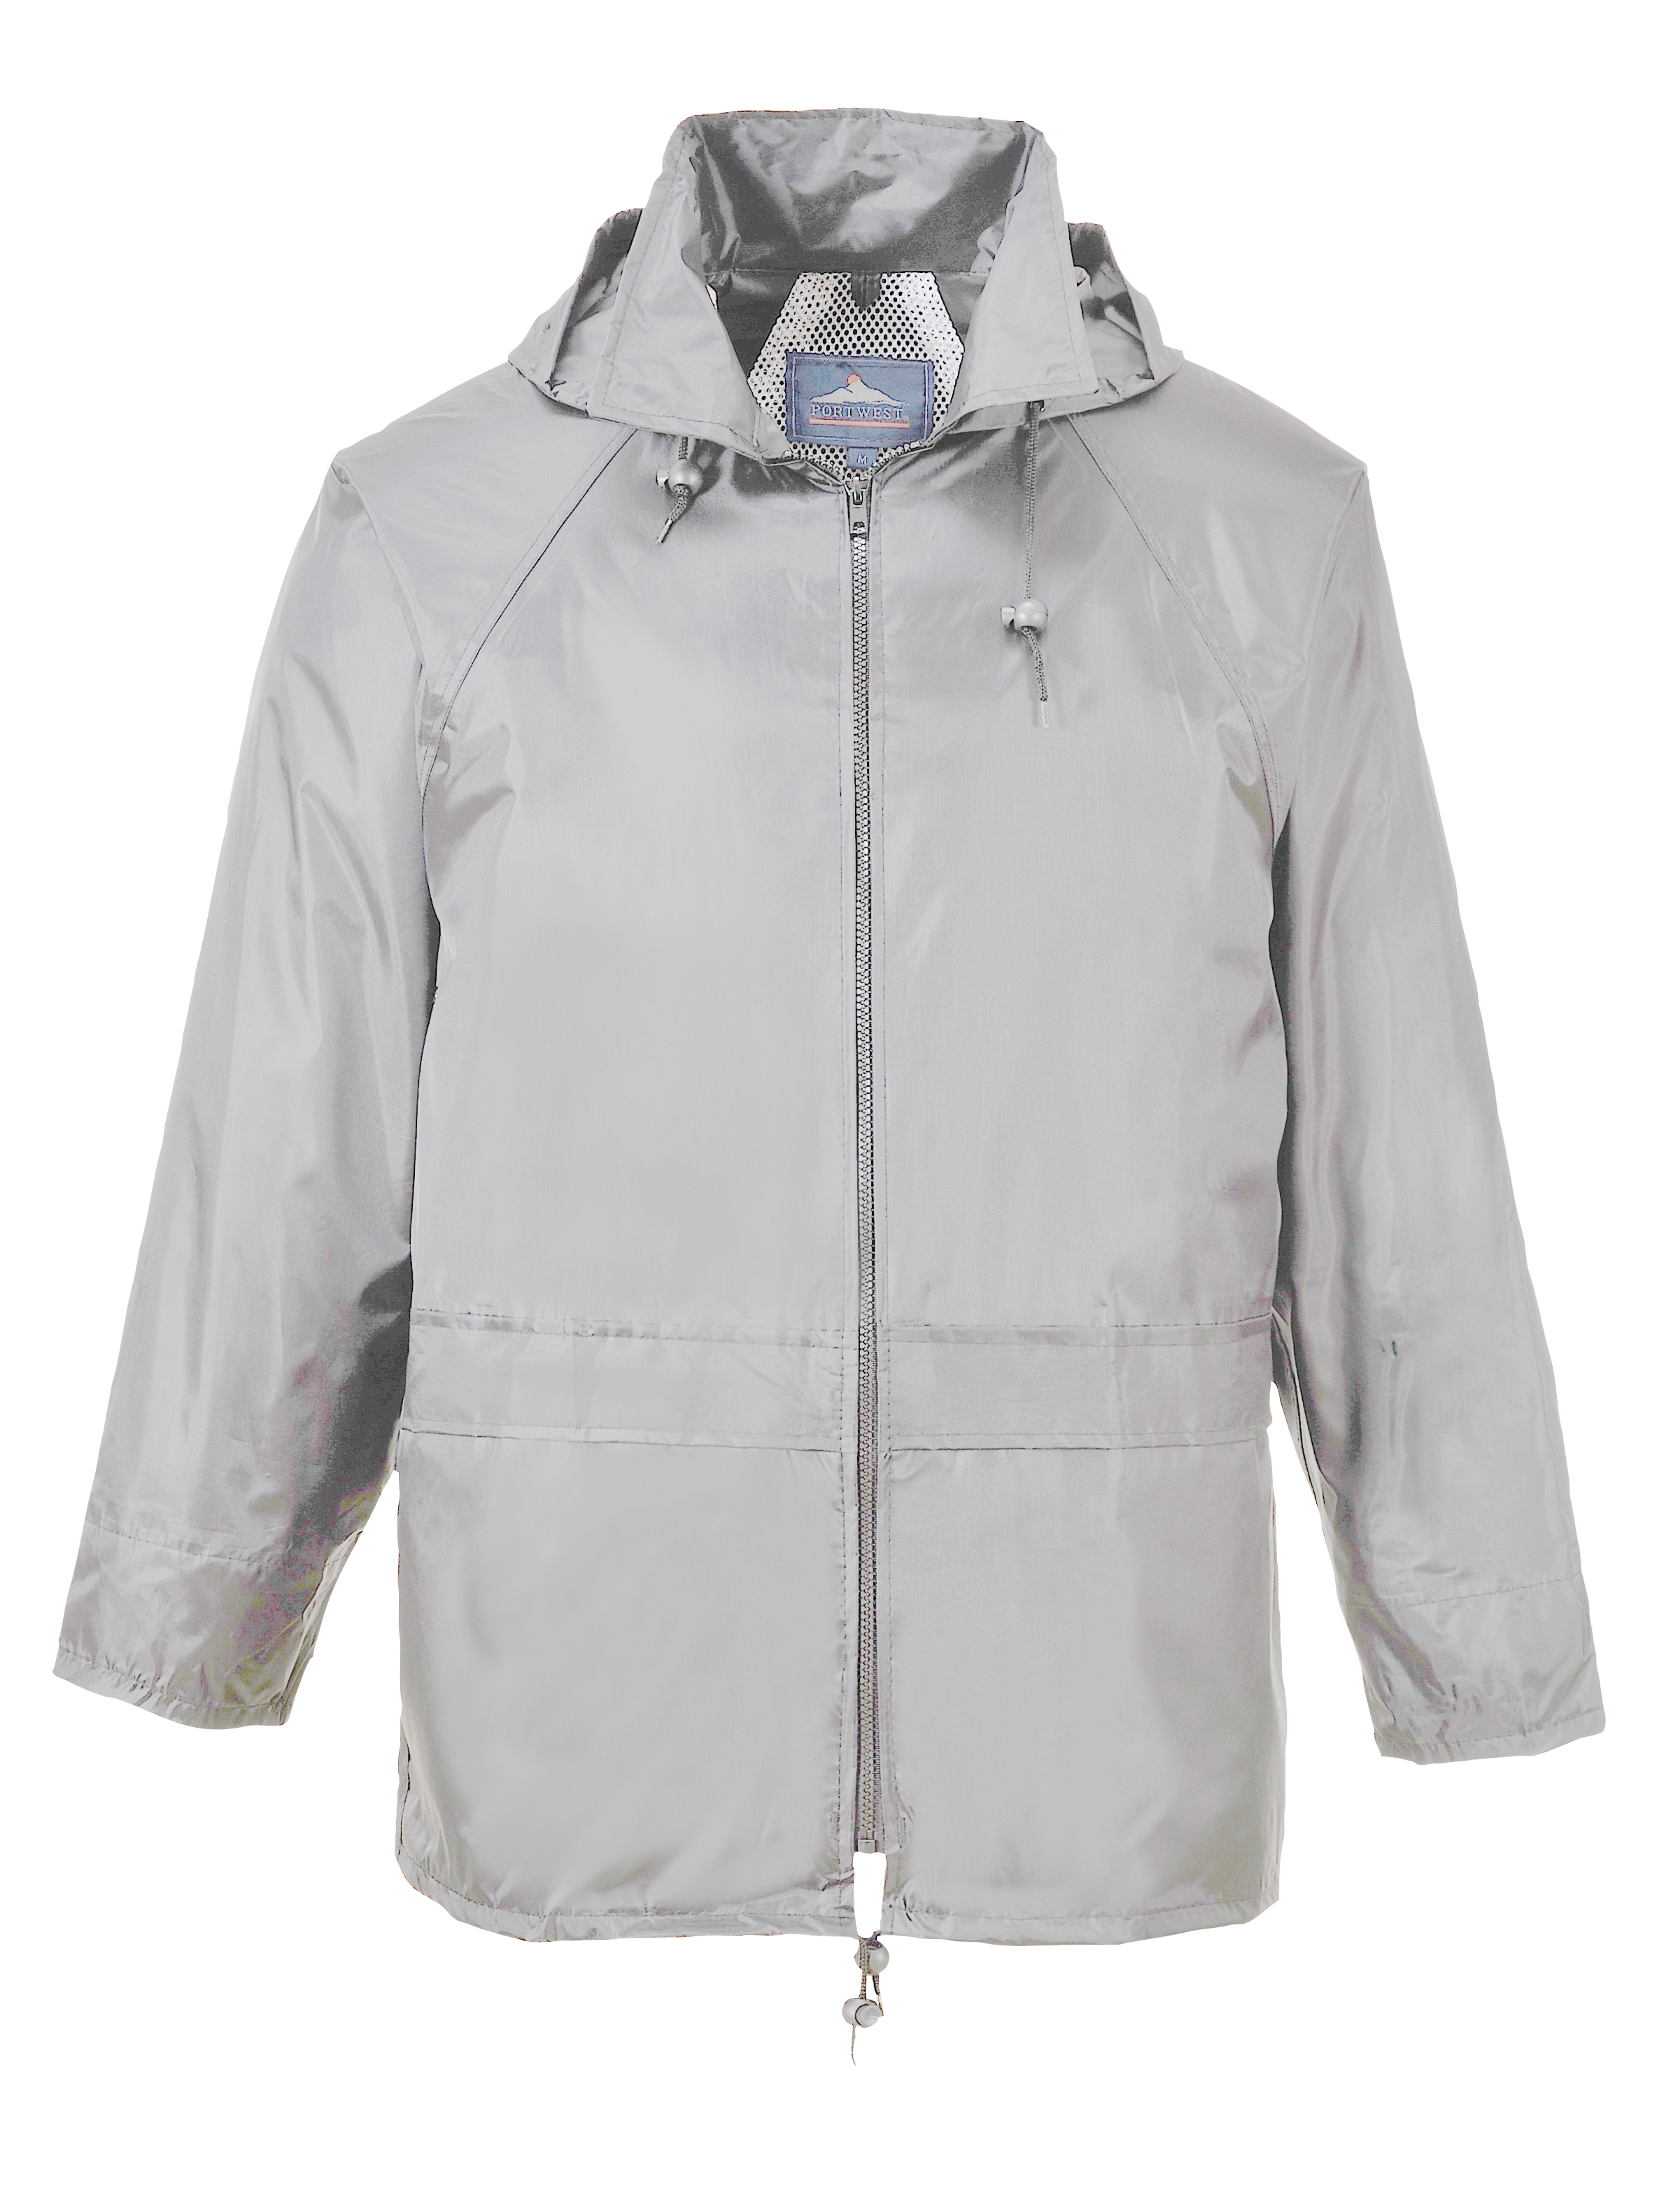 ax-portwest-classic-rain-jacket-grey_ebw5px2ihwqsa2tv.jpeg